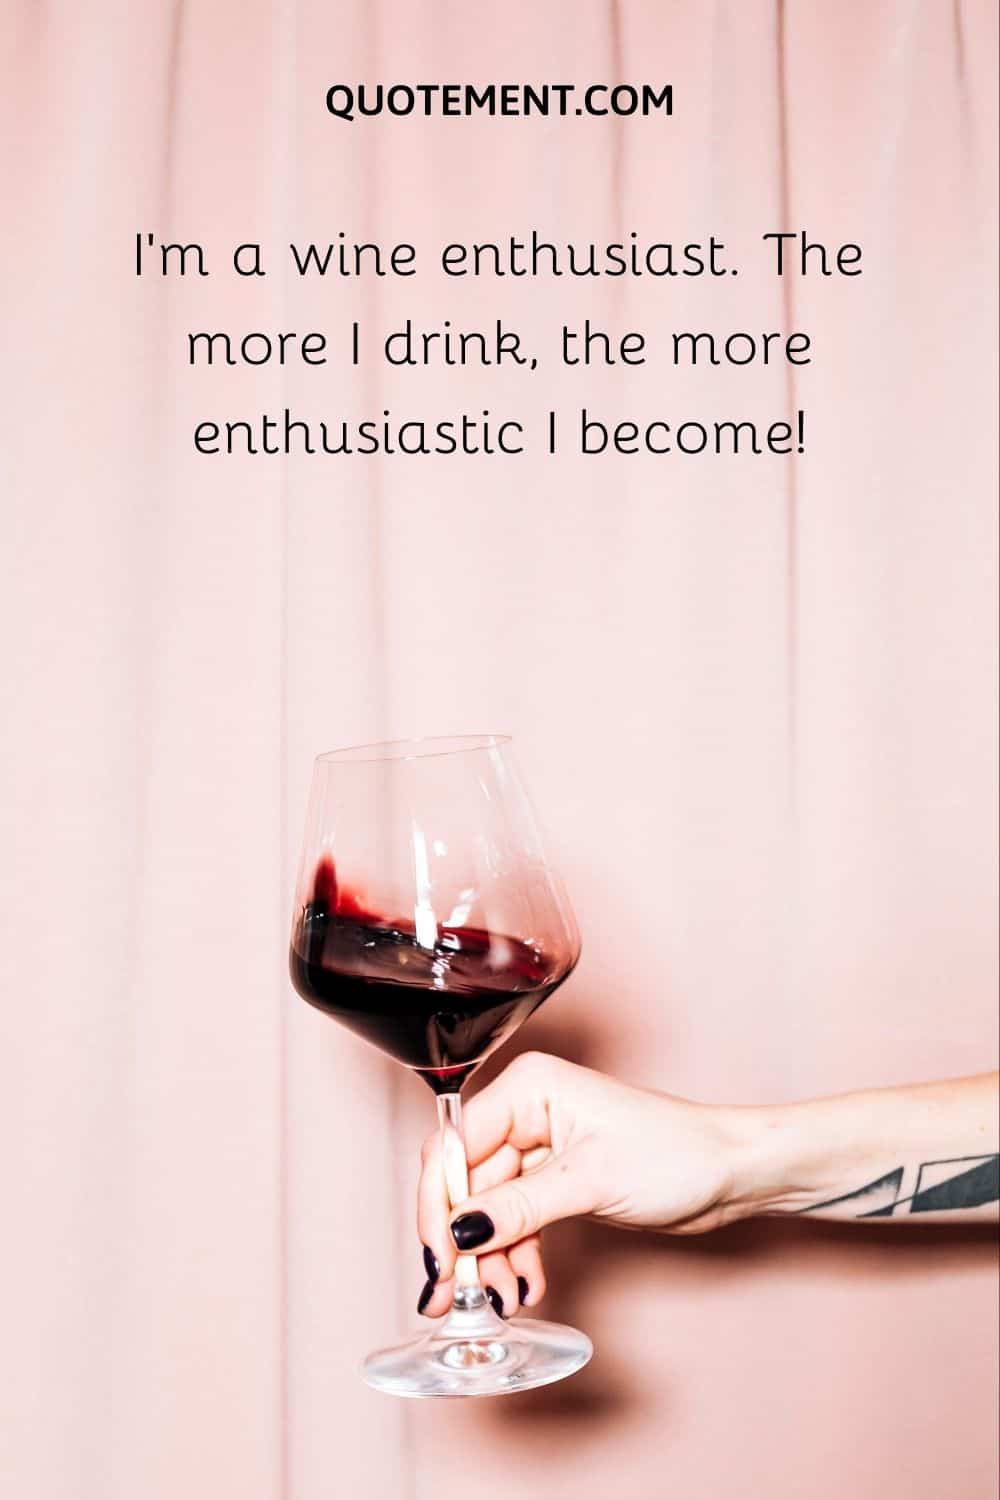 I’m a wine enthusiast